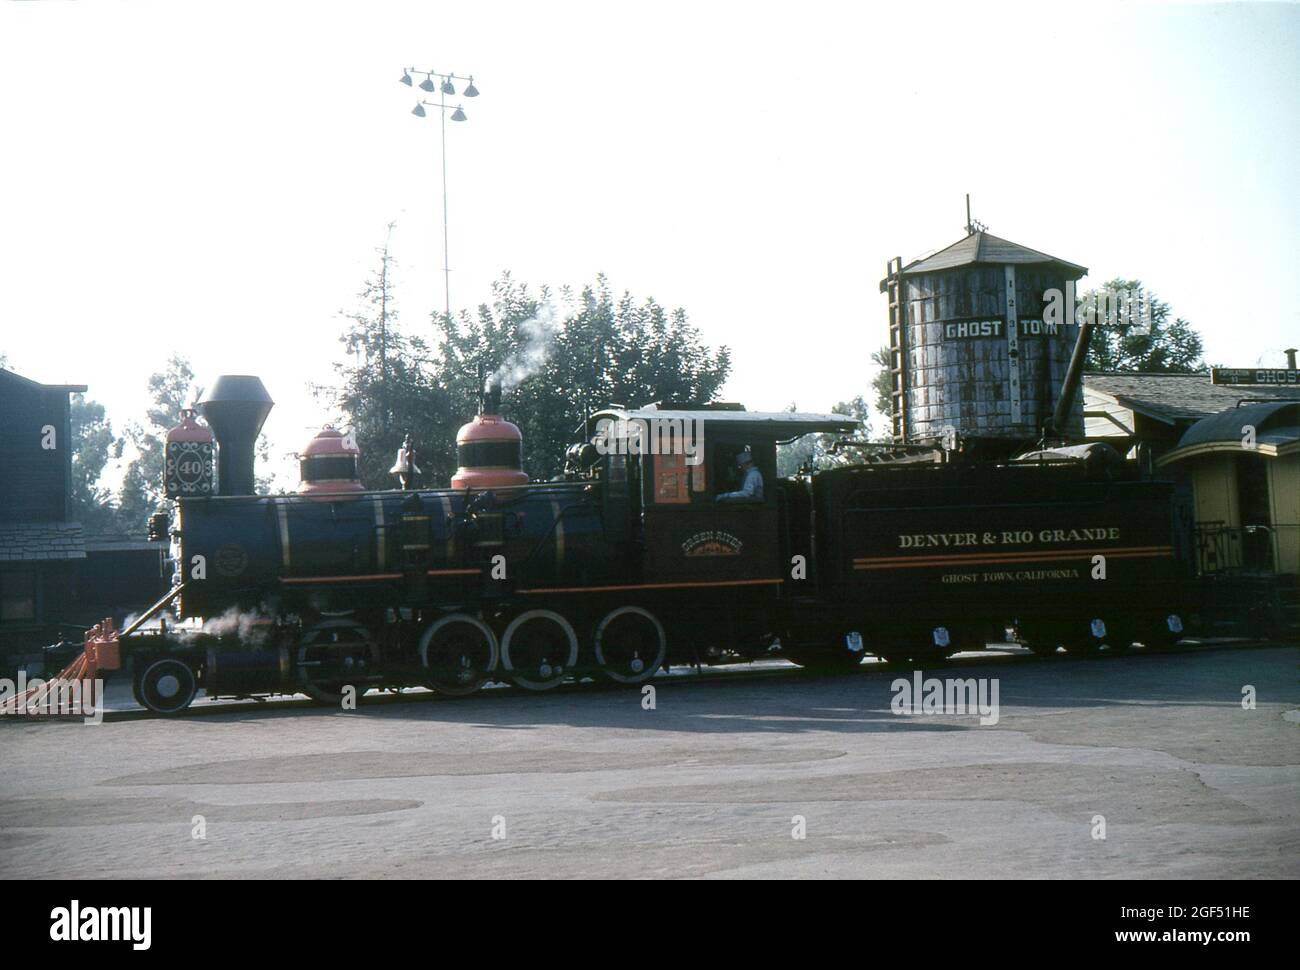 Knott's Berry Farm, Orange County, California. 1959. No.40 ‘Green River’, an ex-Denver & Rio Grande Railroad steam locomotive, operating on the Ghost Town & Calico Railroad. Stock Photo